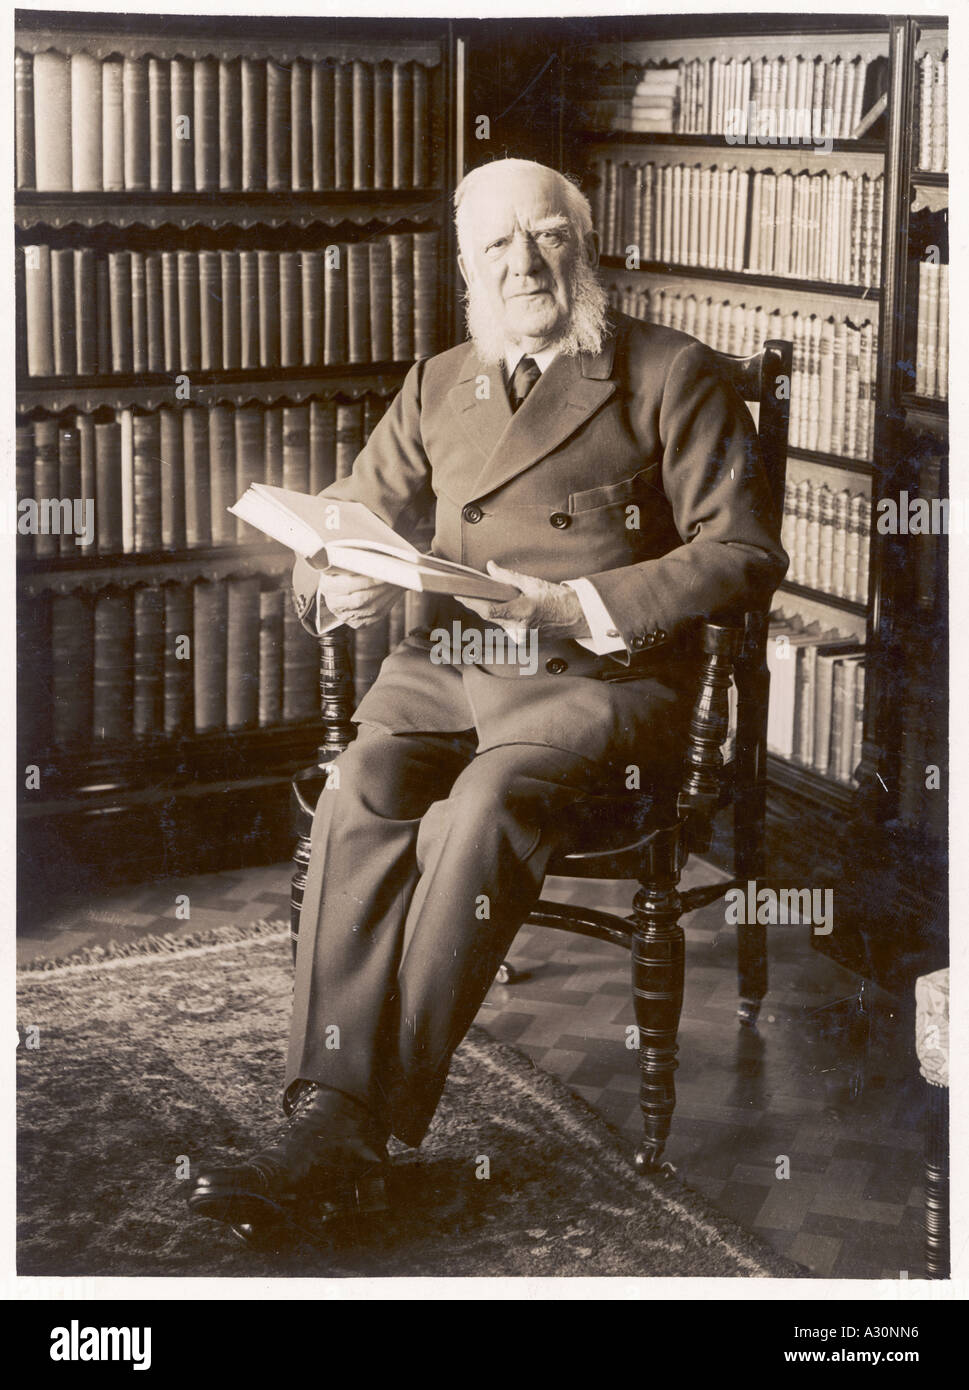 Sir Eg Clarke B W Photo Stock Photo